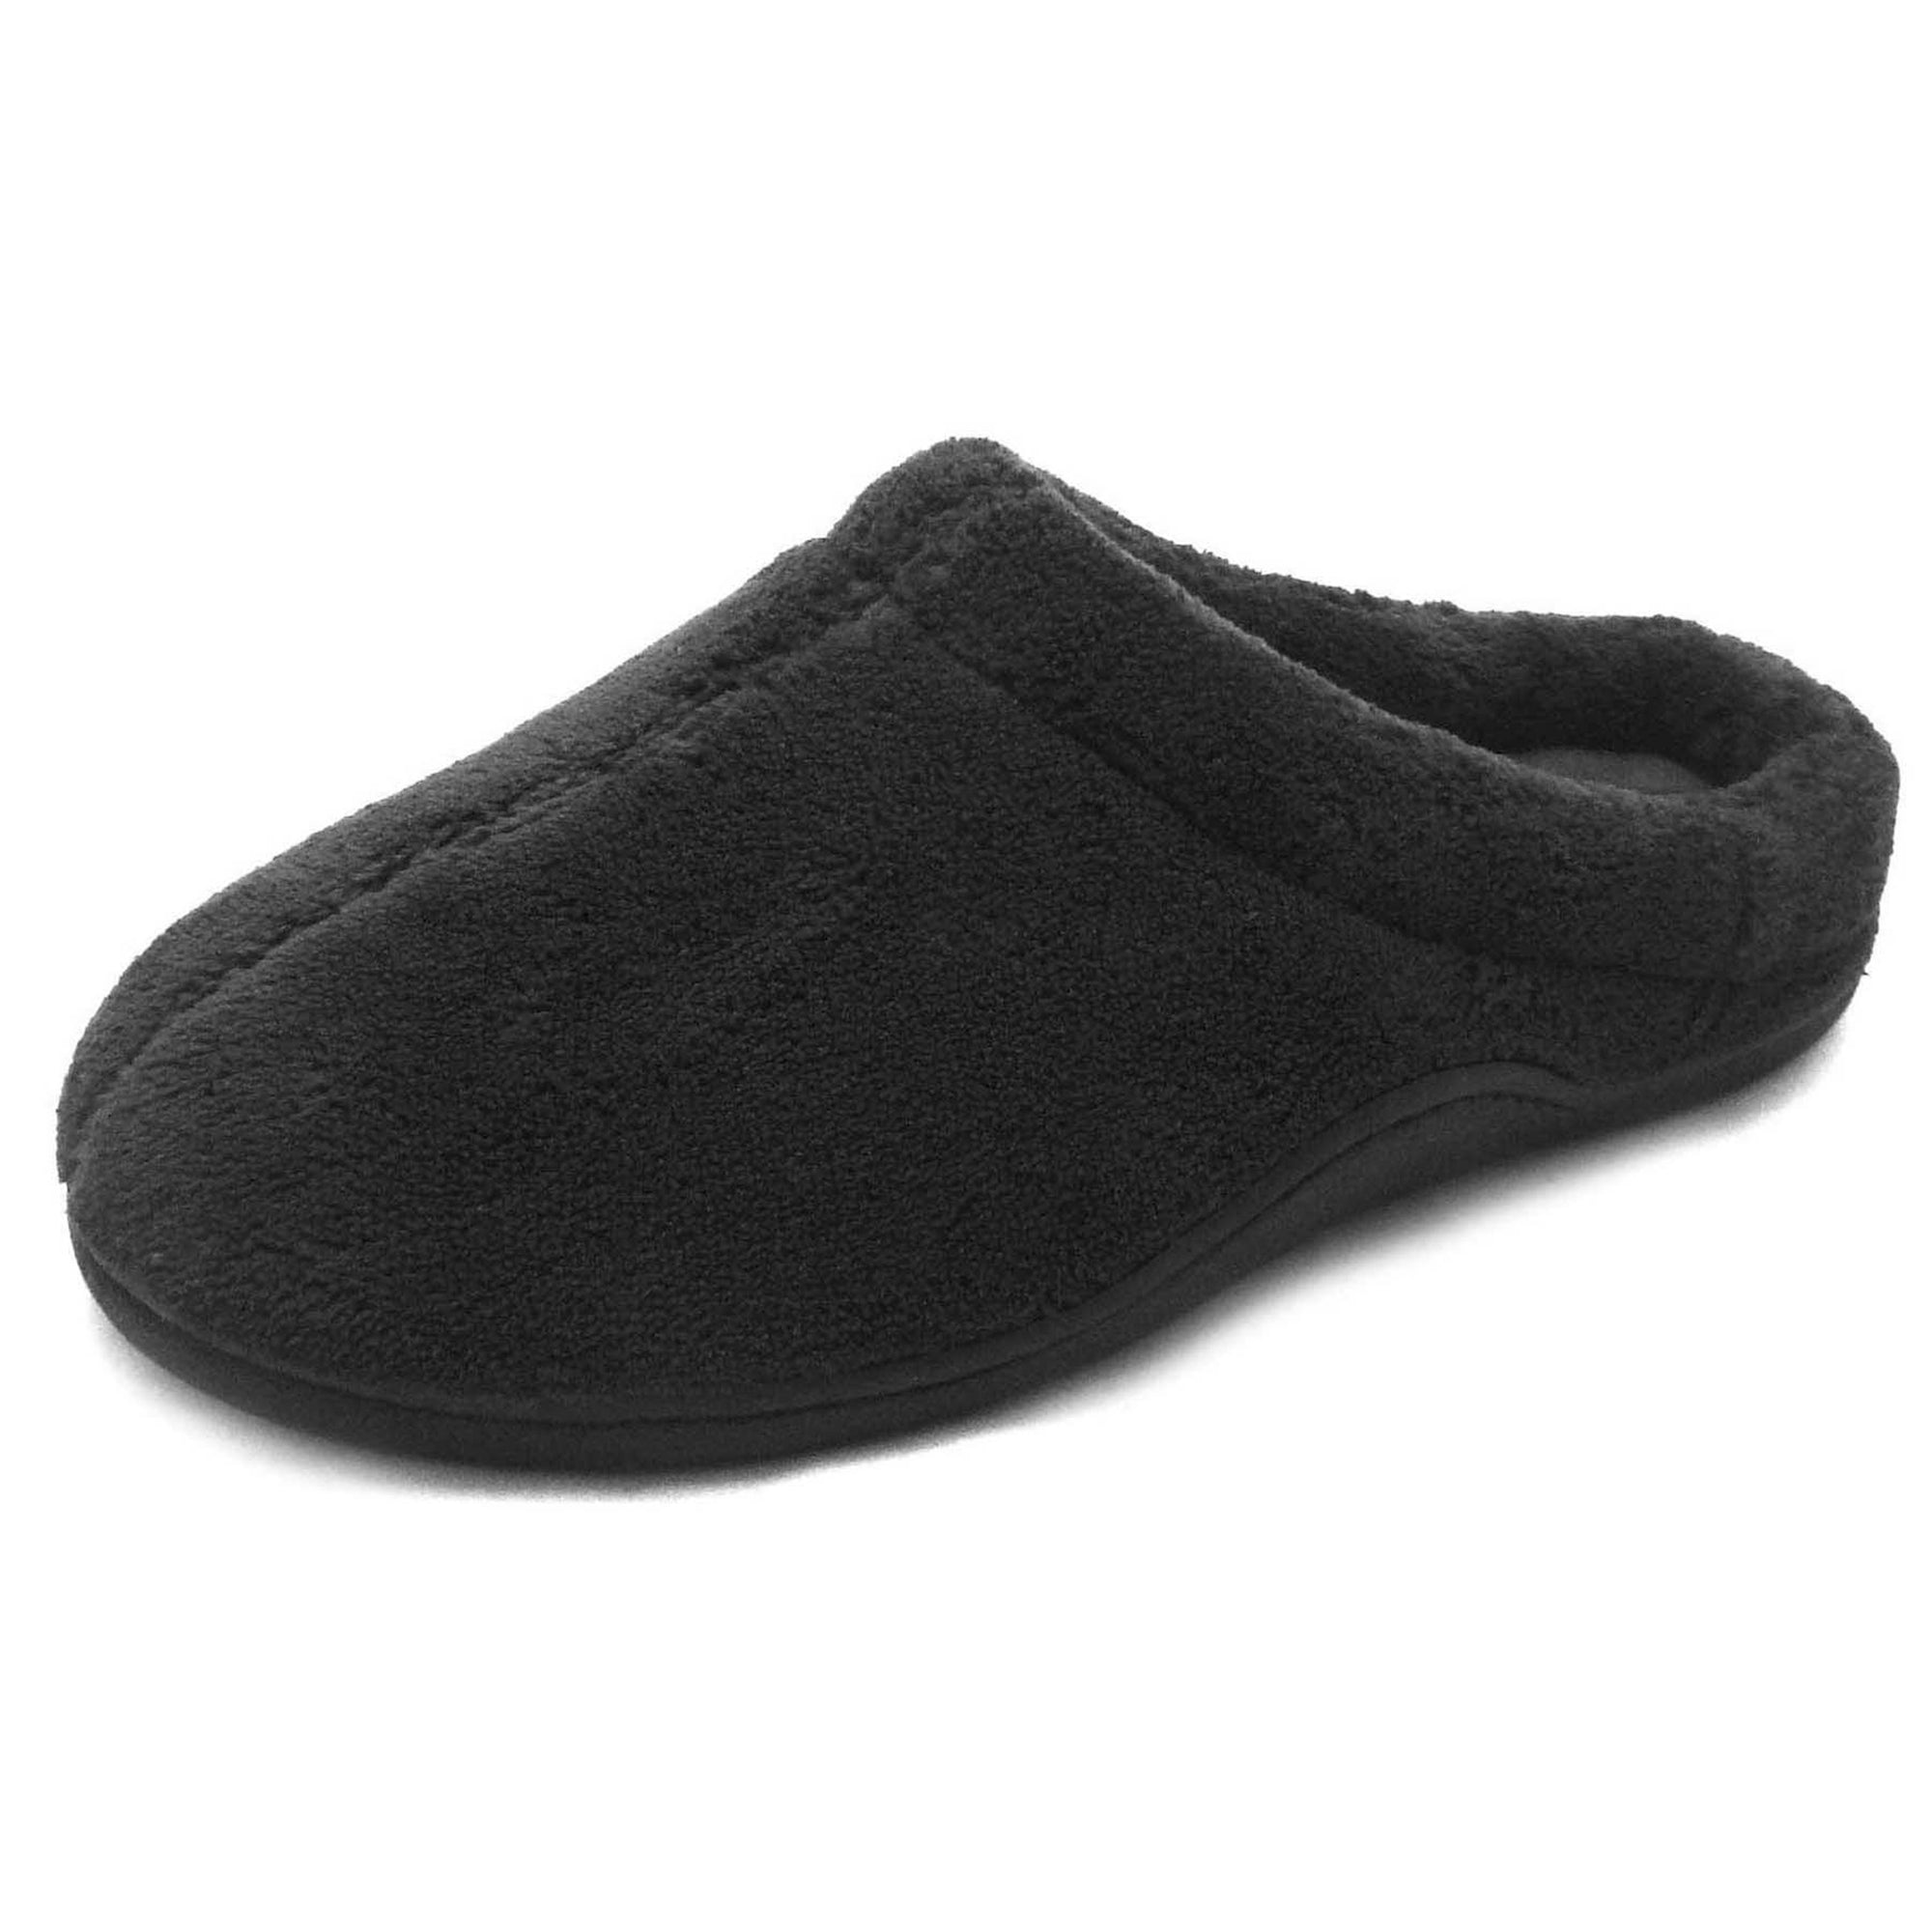 Hollister teddy lined slipper in black - ShopStyle